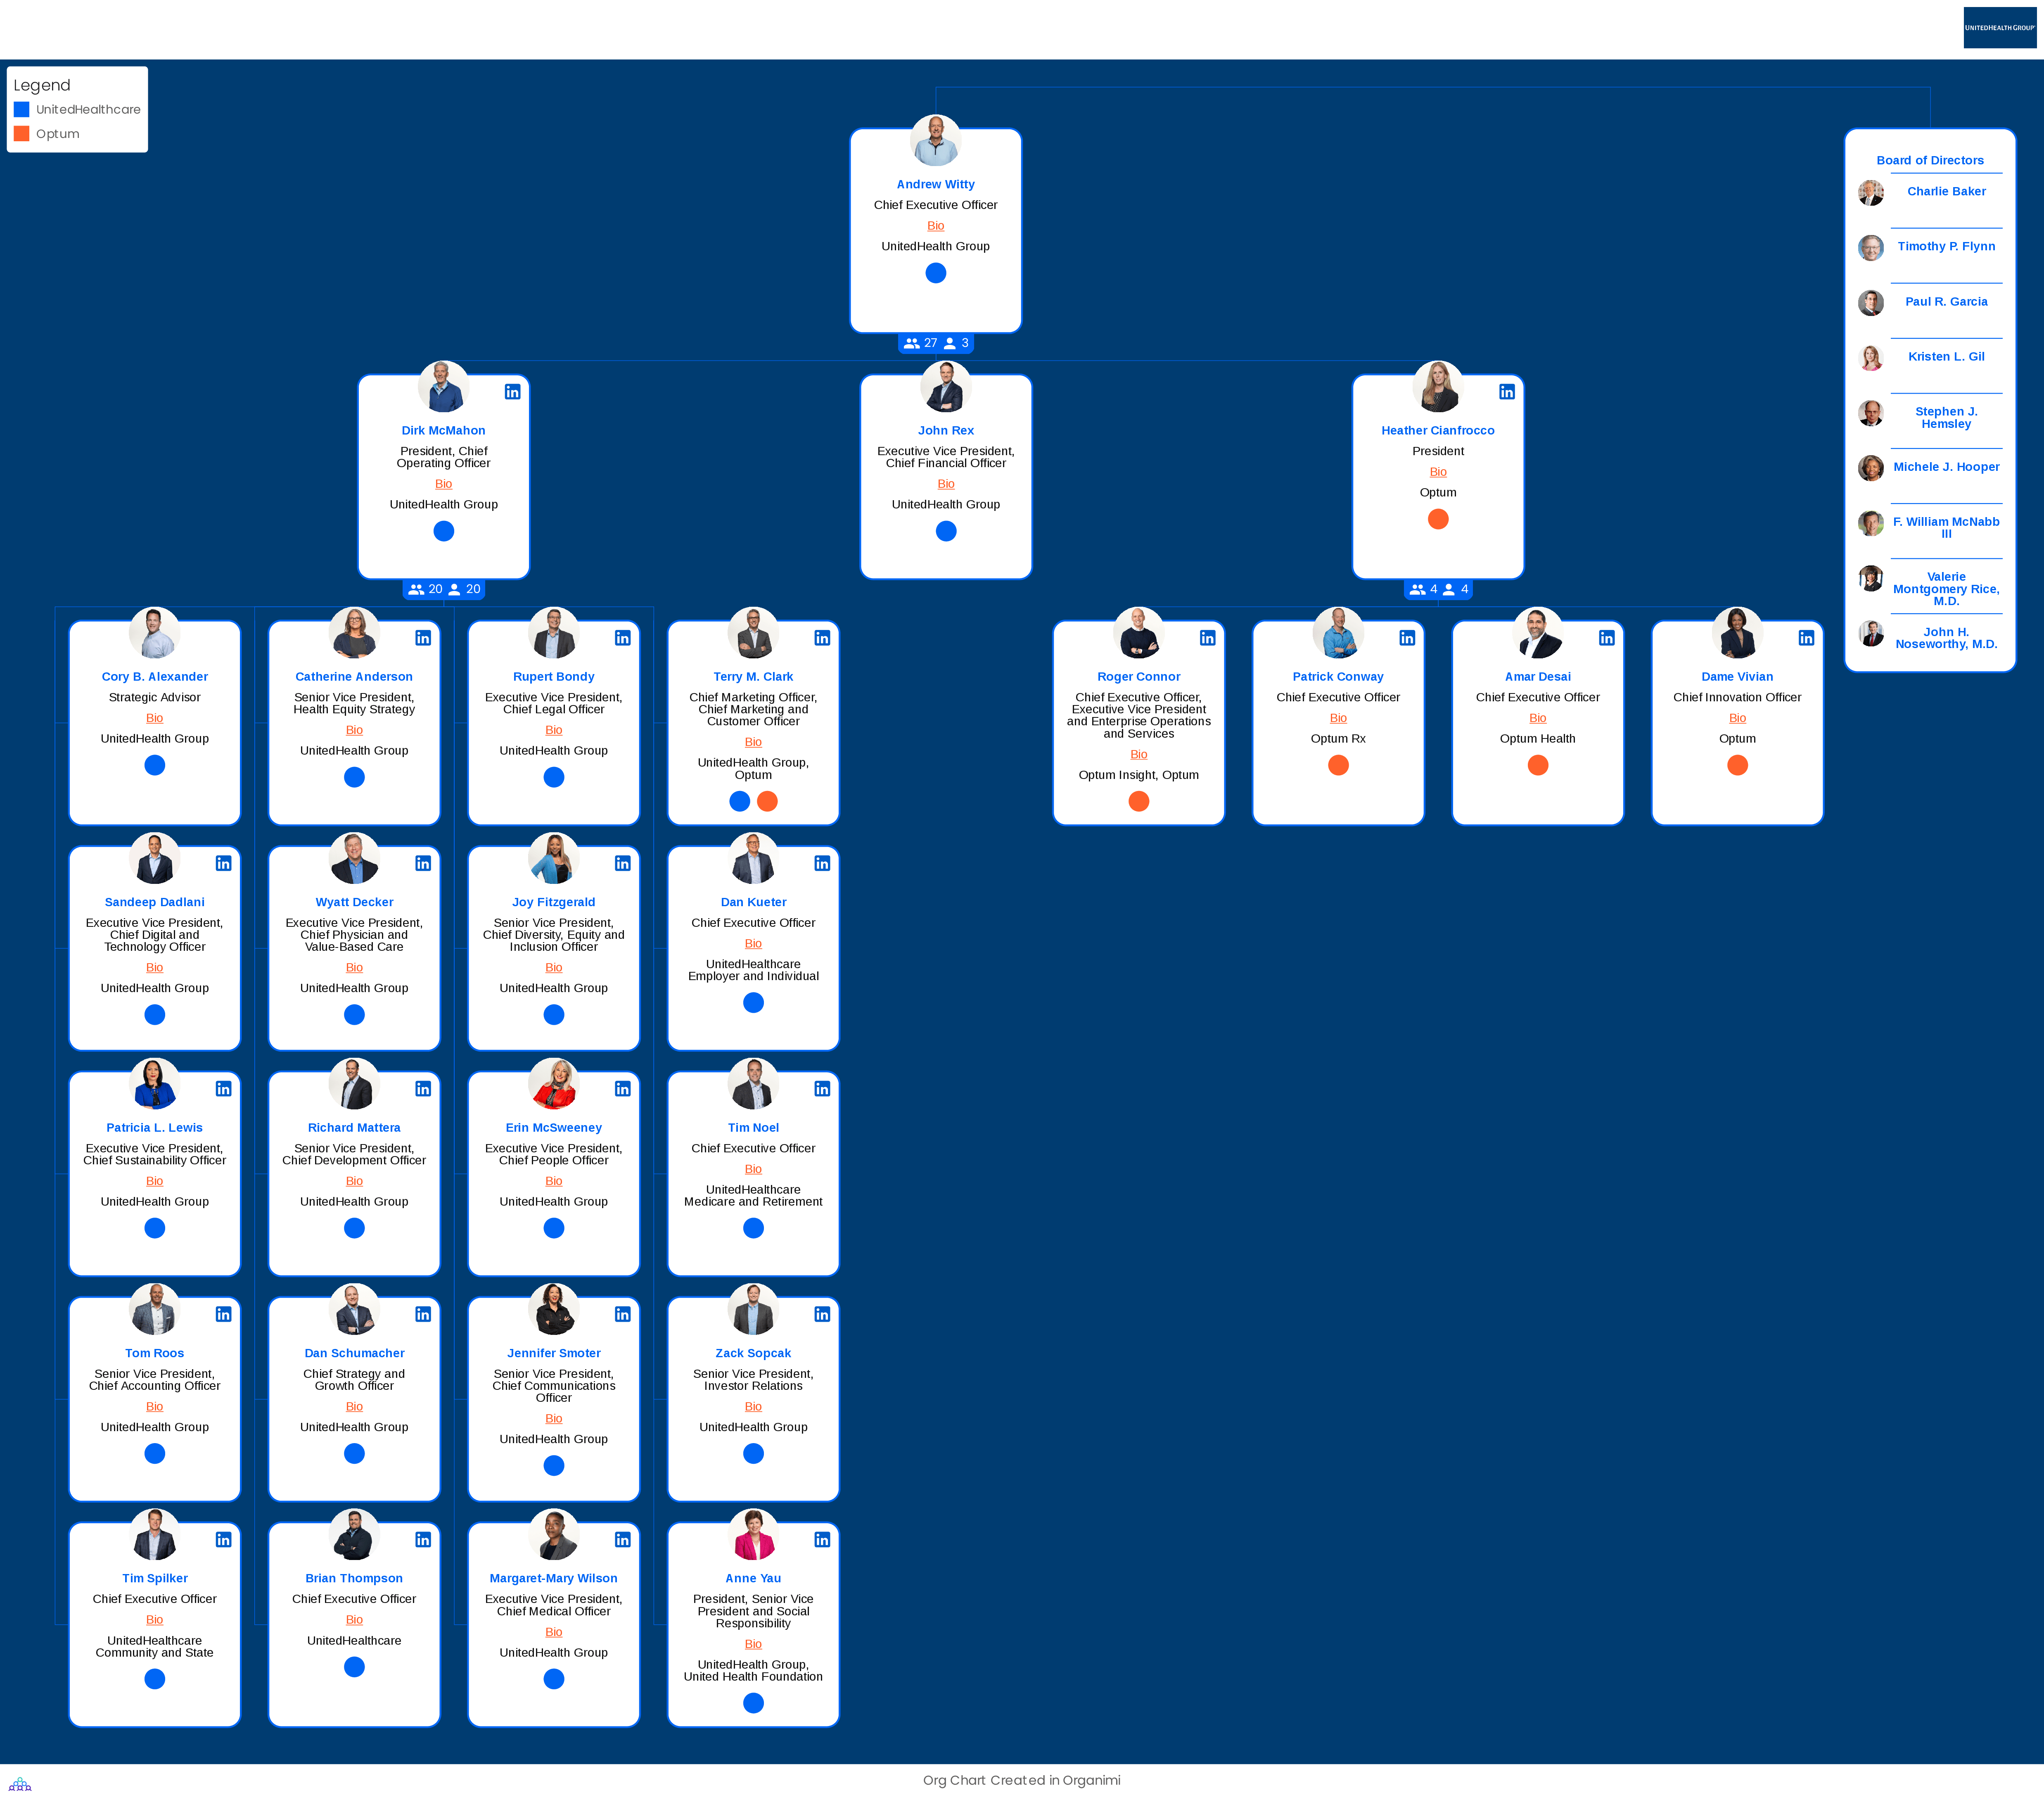 UnitedHealth Group's Organizational Structure Chart